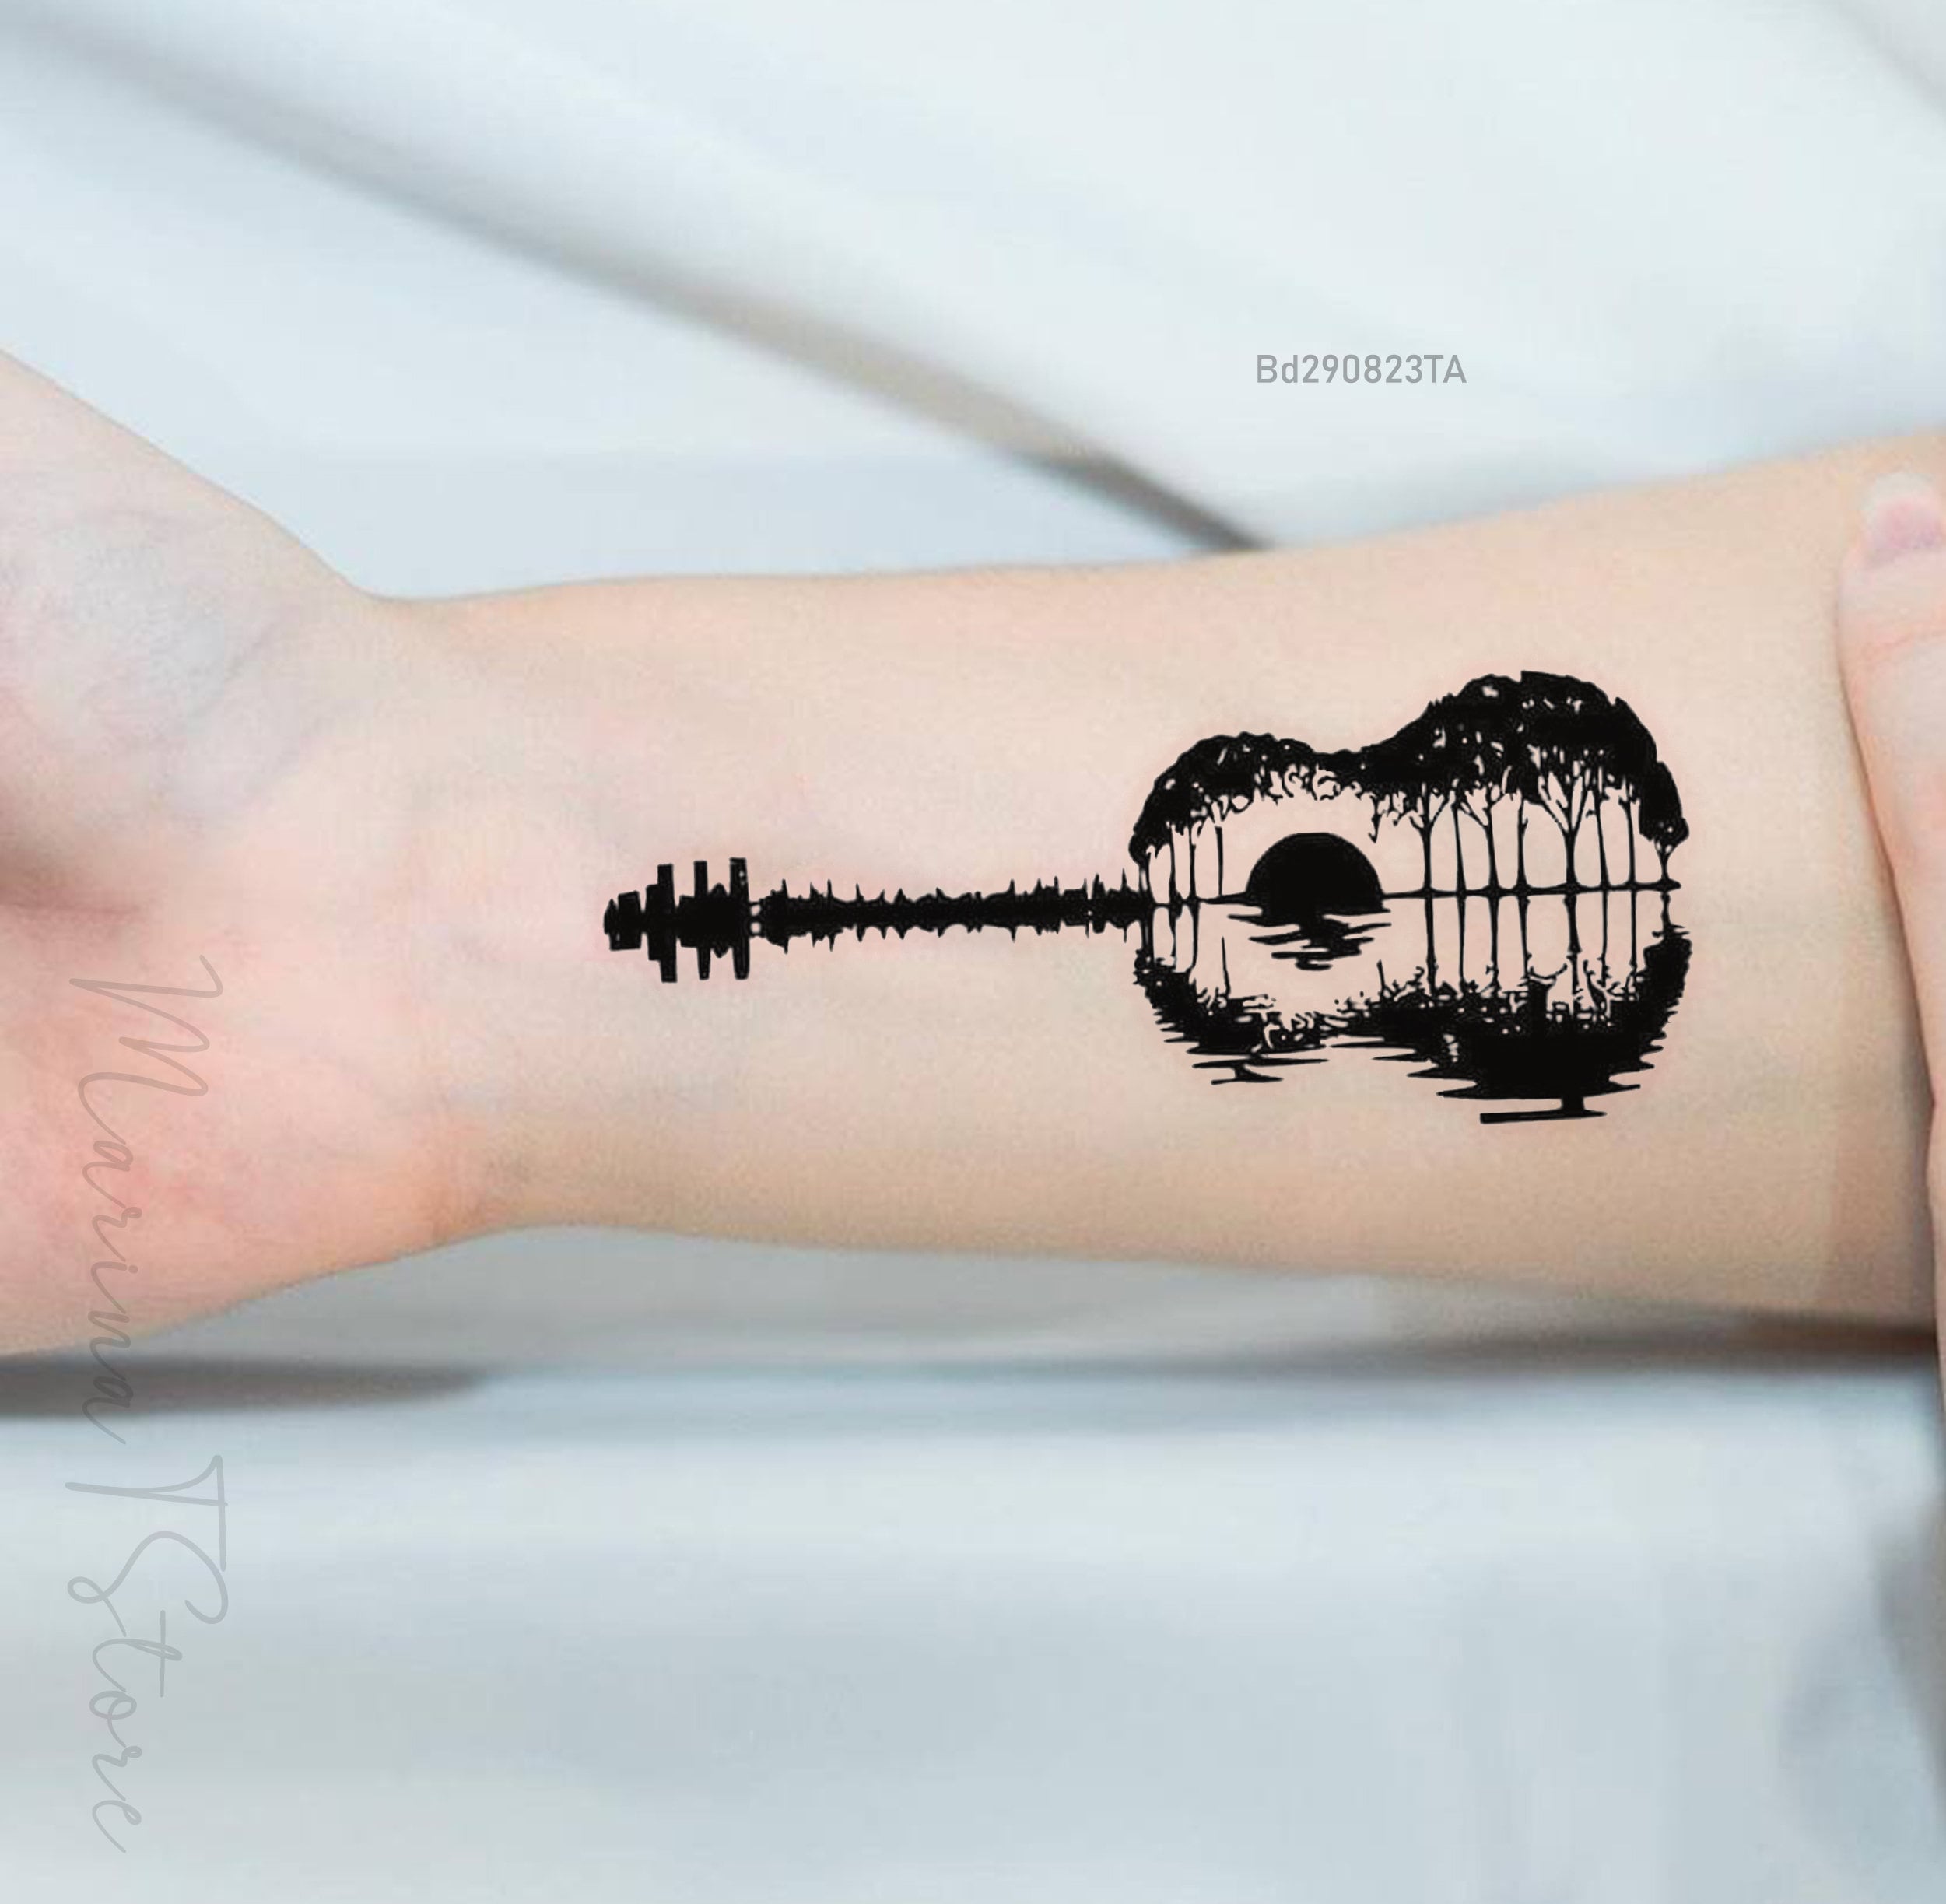 Bass Guitar tattoo by Jayson - Artistic Realm Tattoos | Facebook